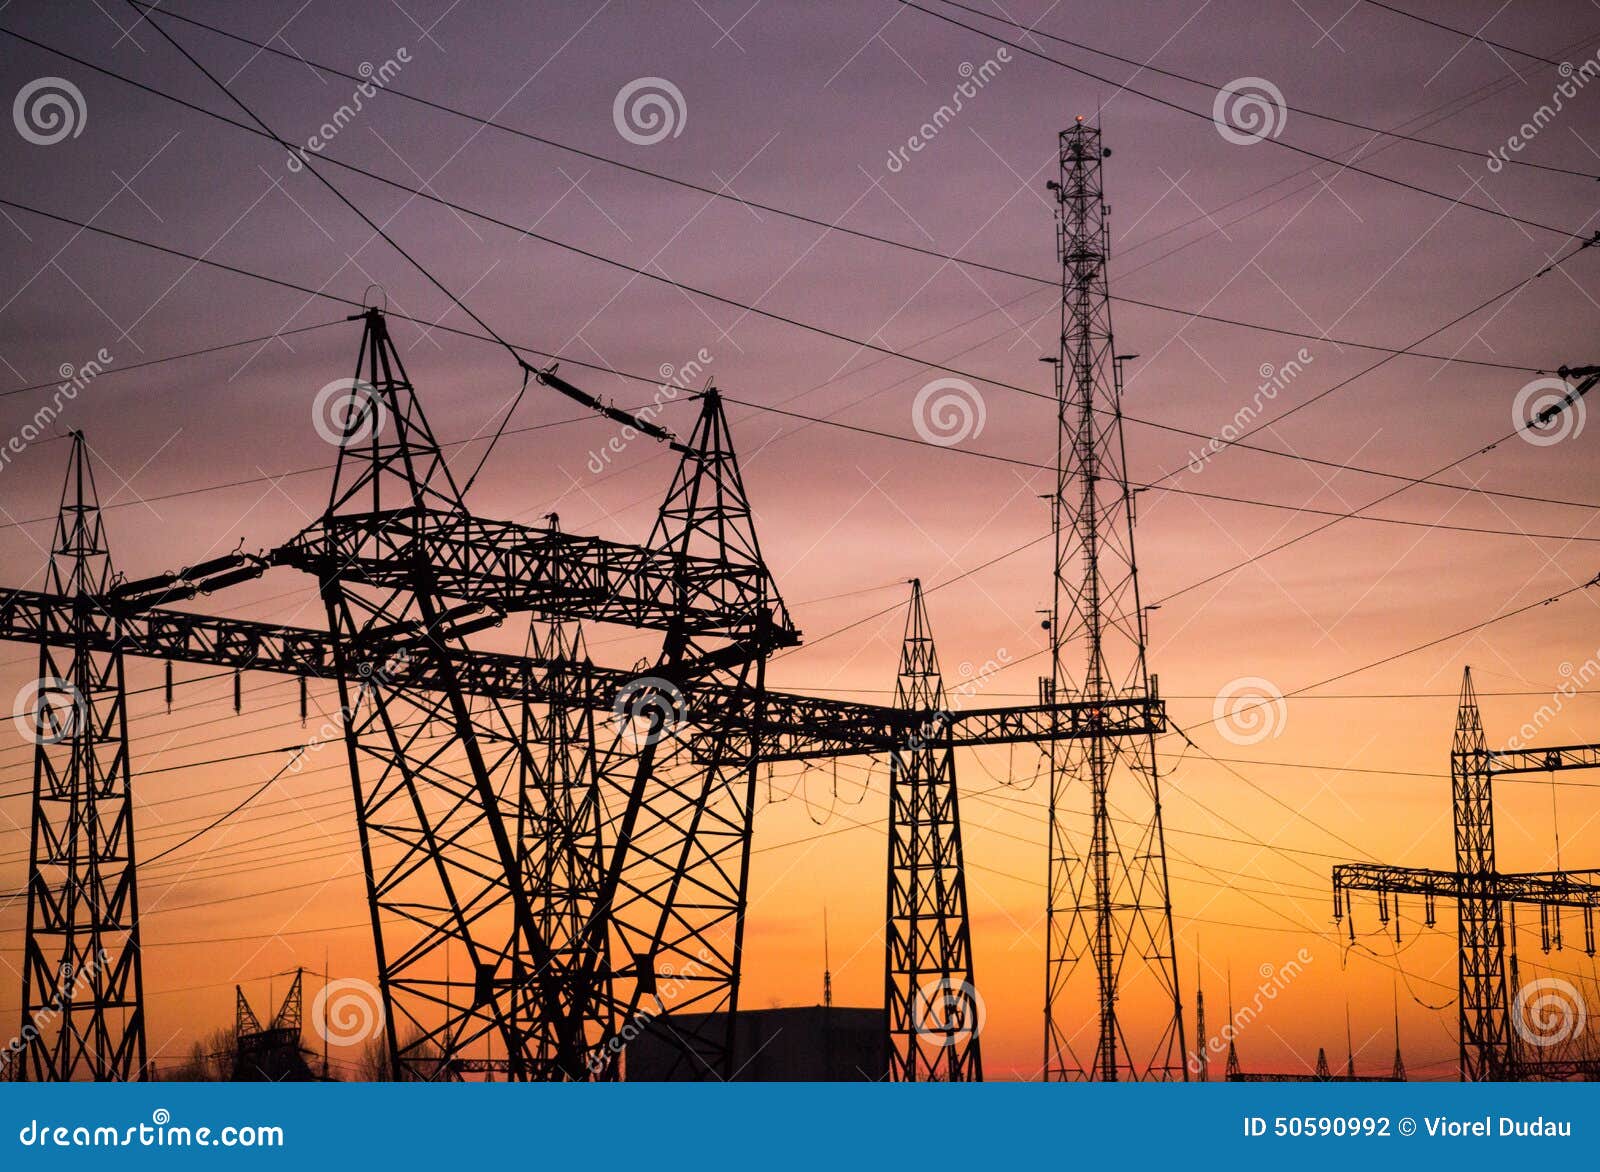 electric power pylons